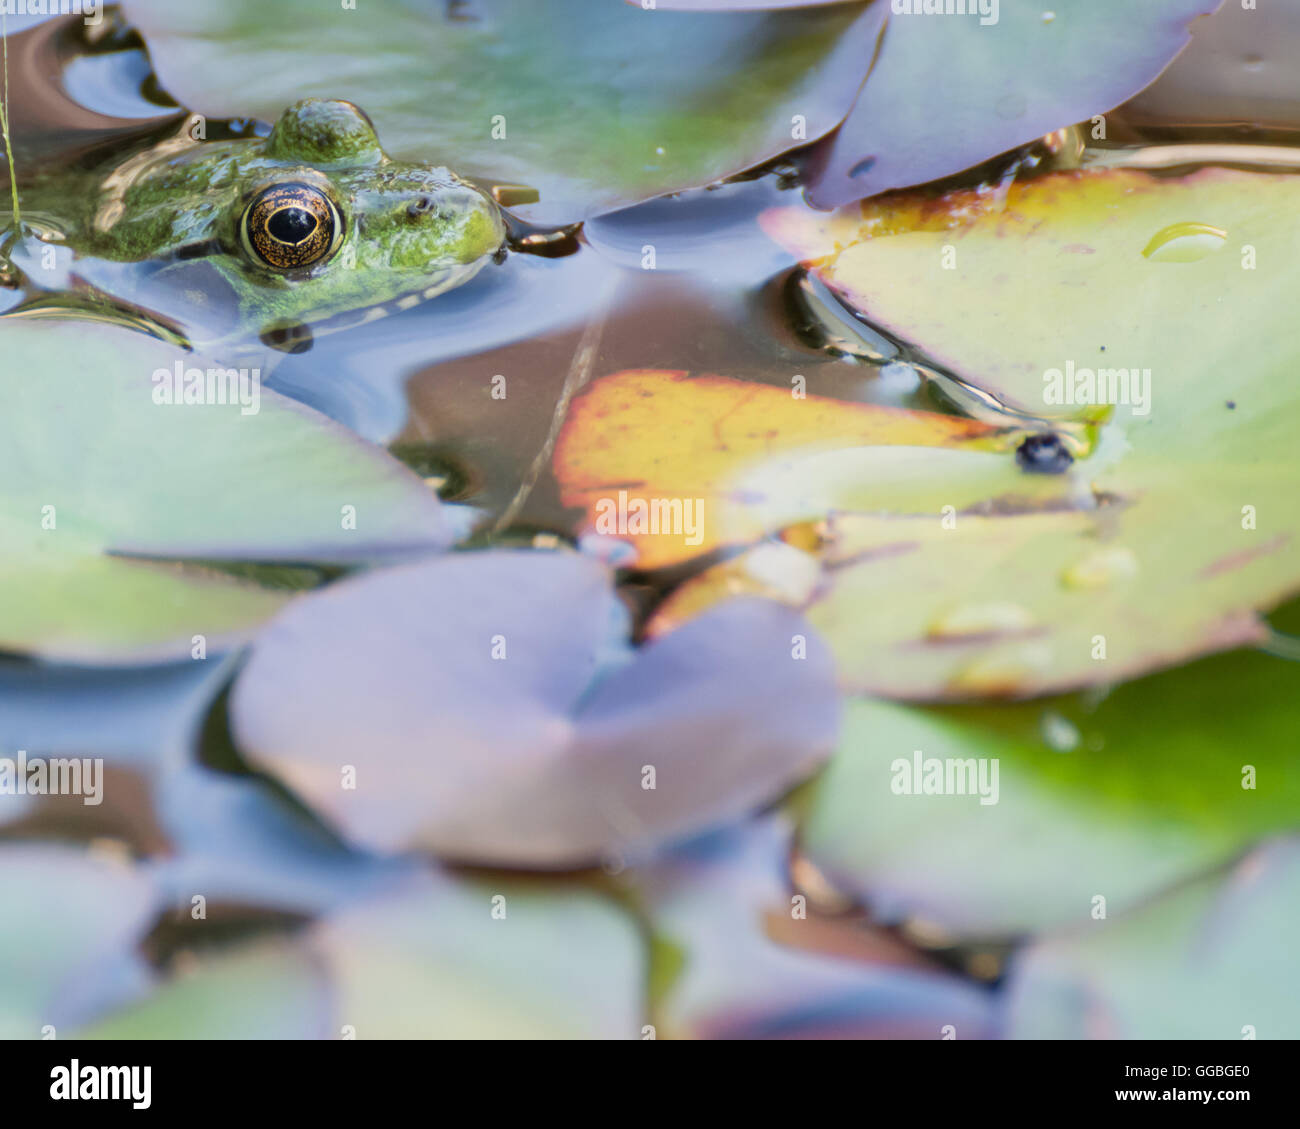 Bullfrog seduta in una palude con lilly pad. Foto Stock